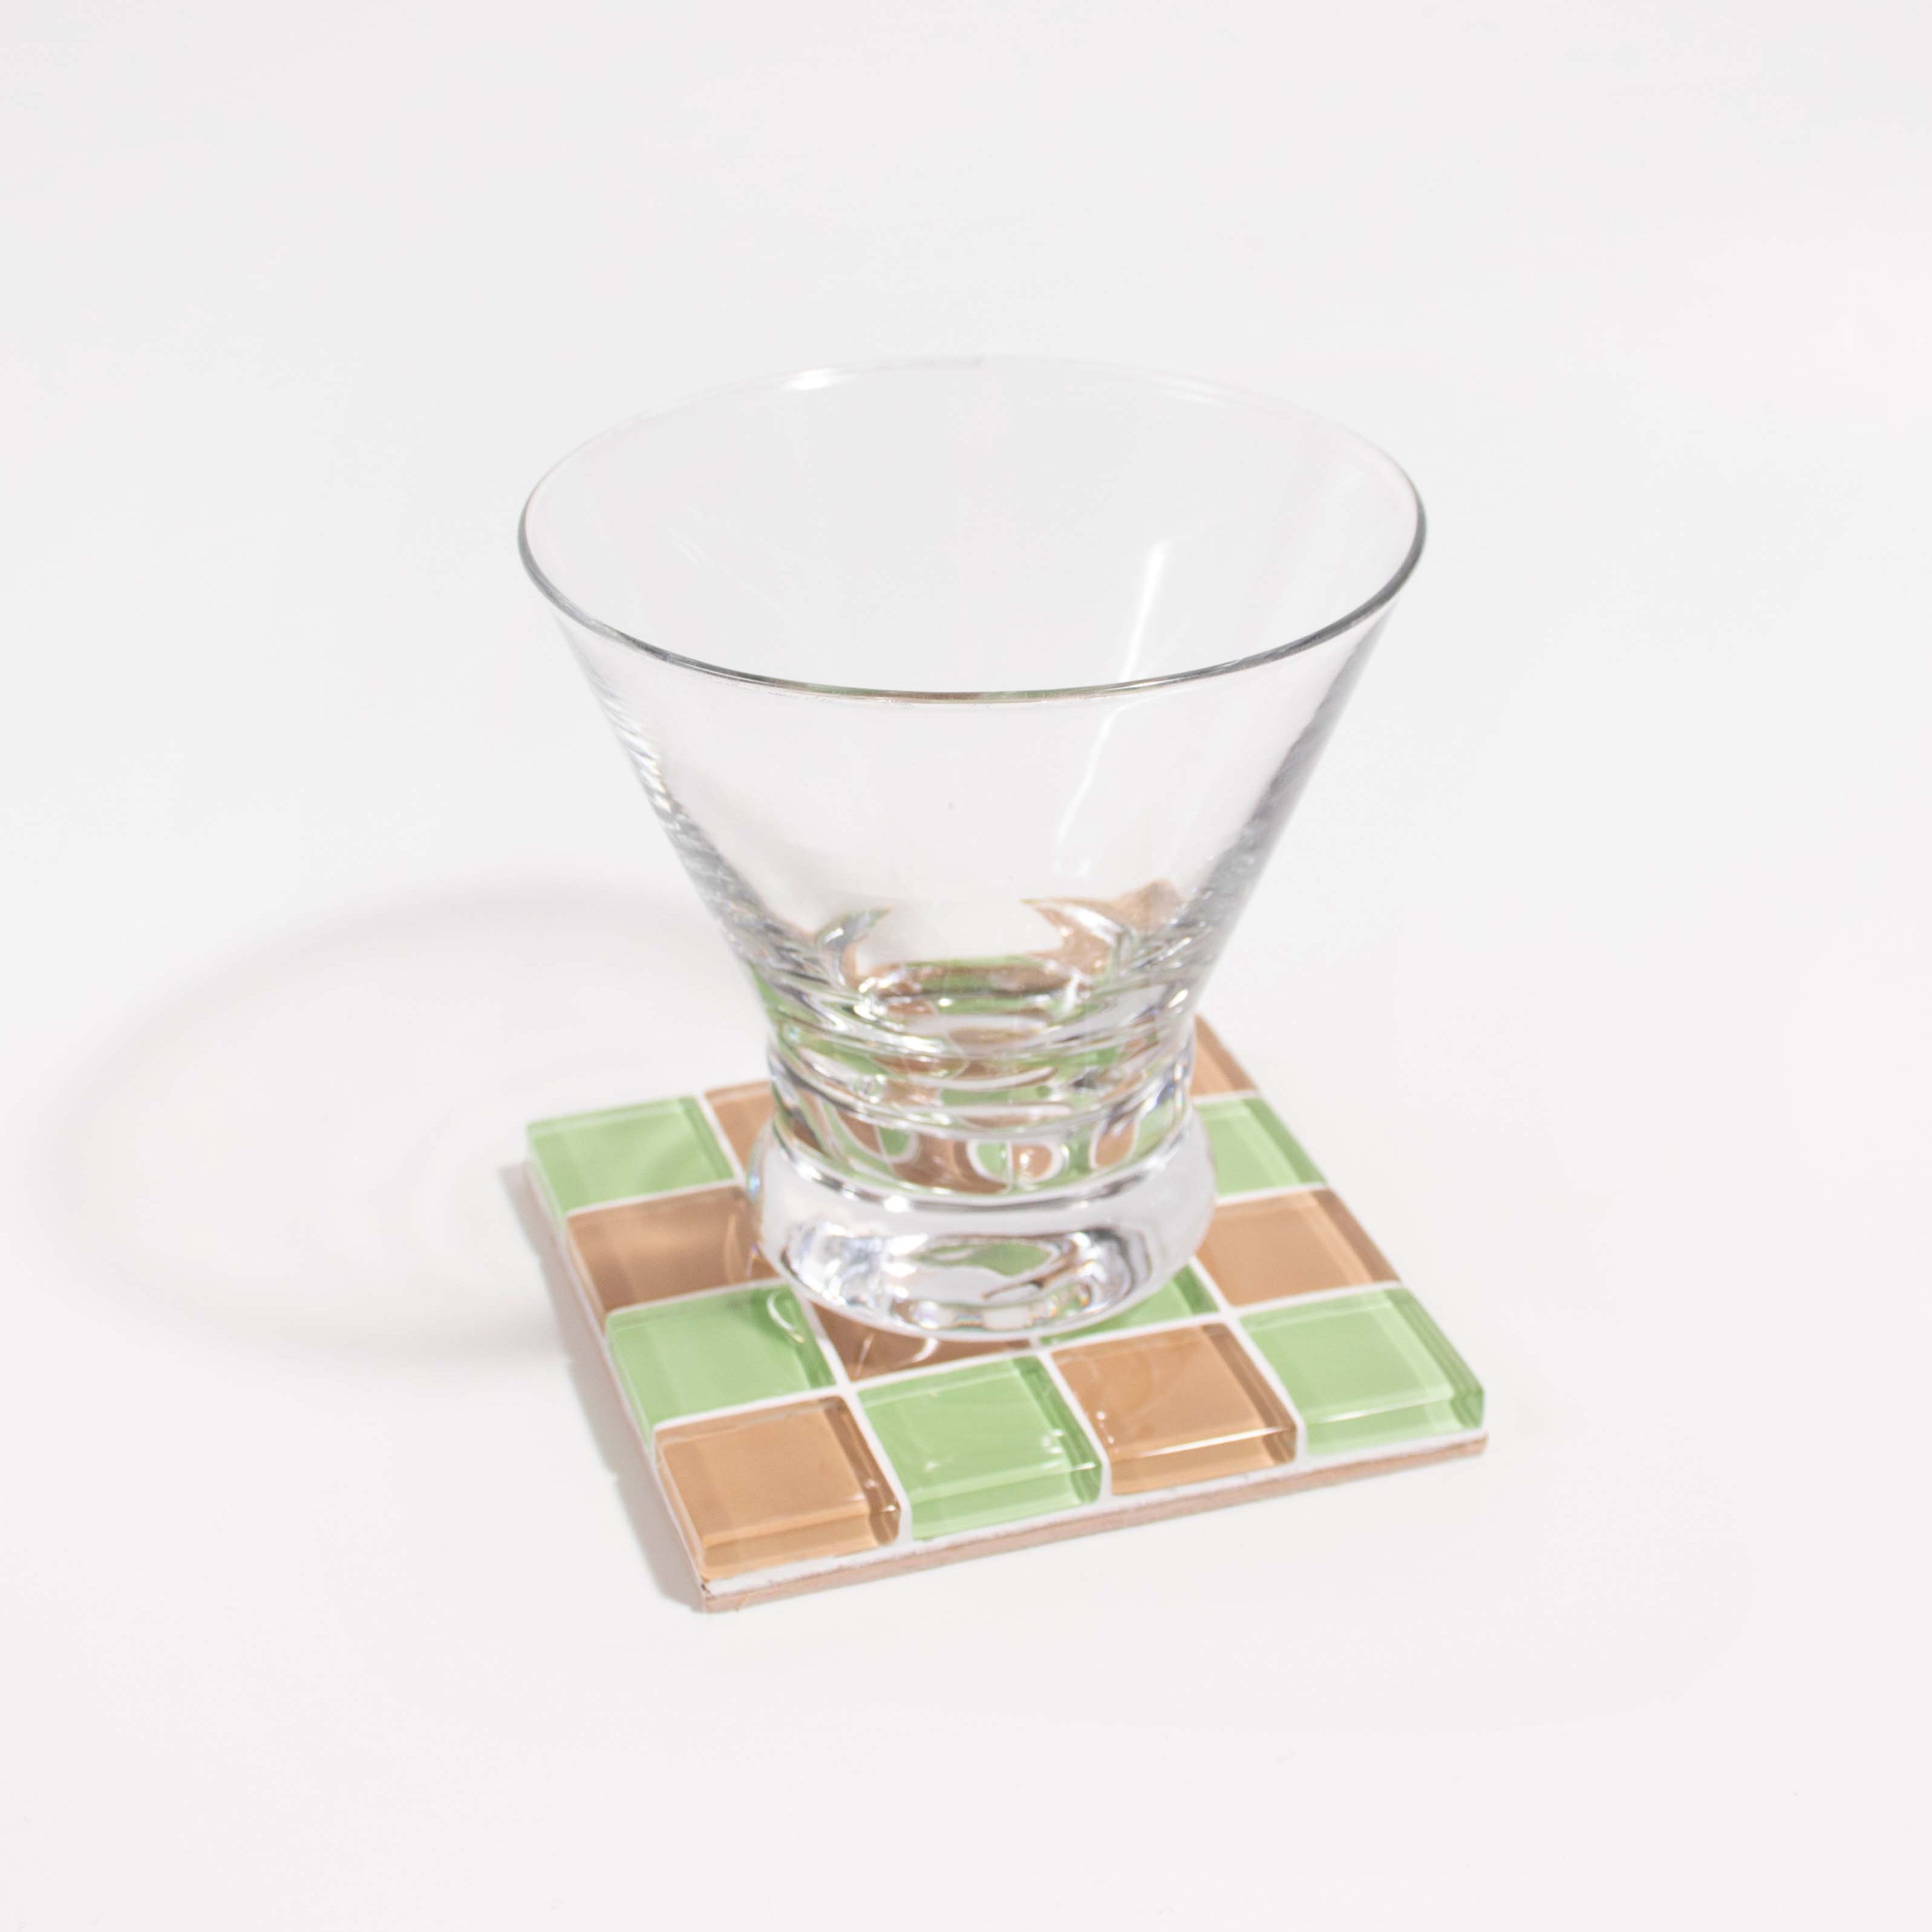 GLASS TILE COASTER - Earthy Green by Subtle Art Studios